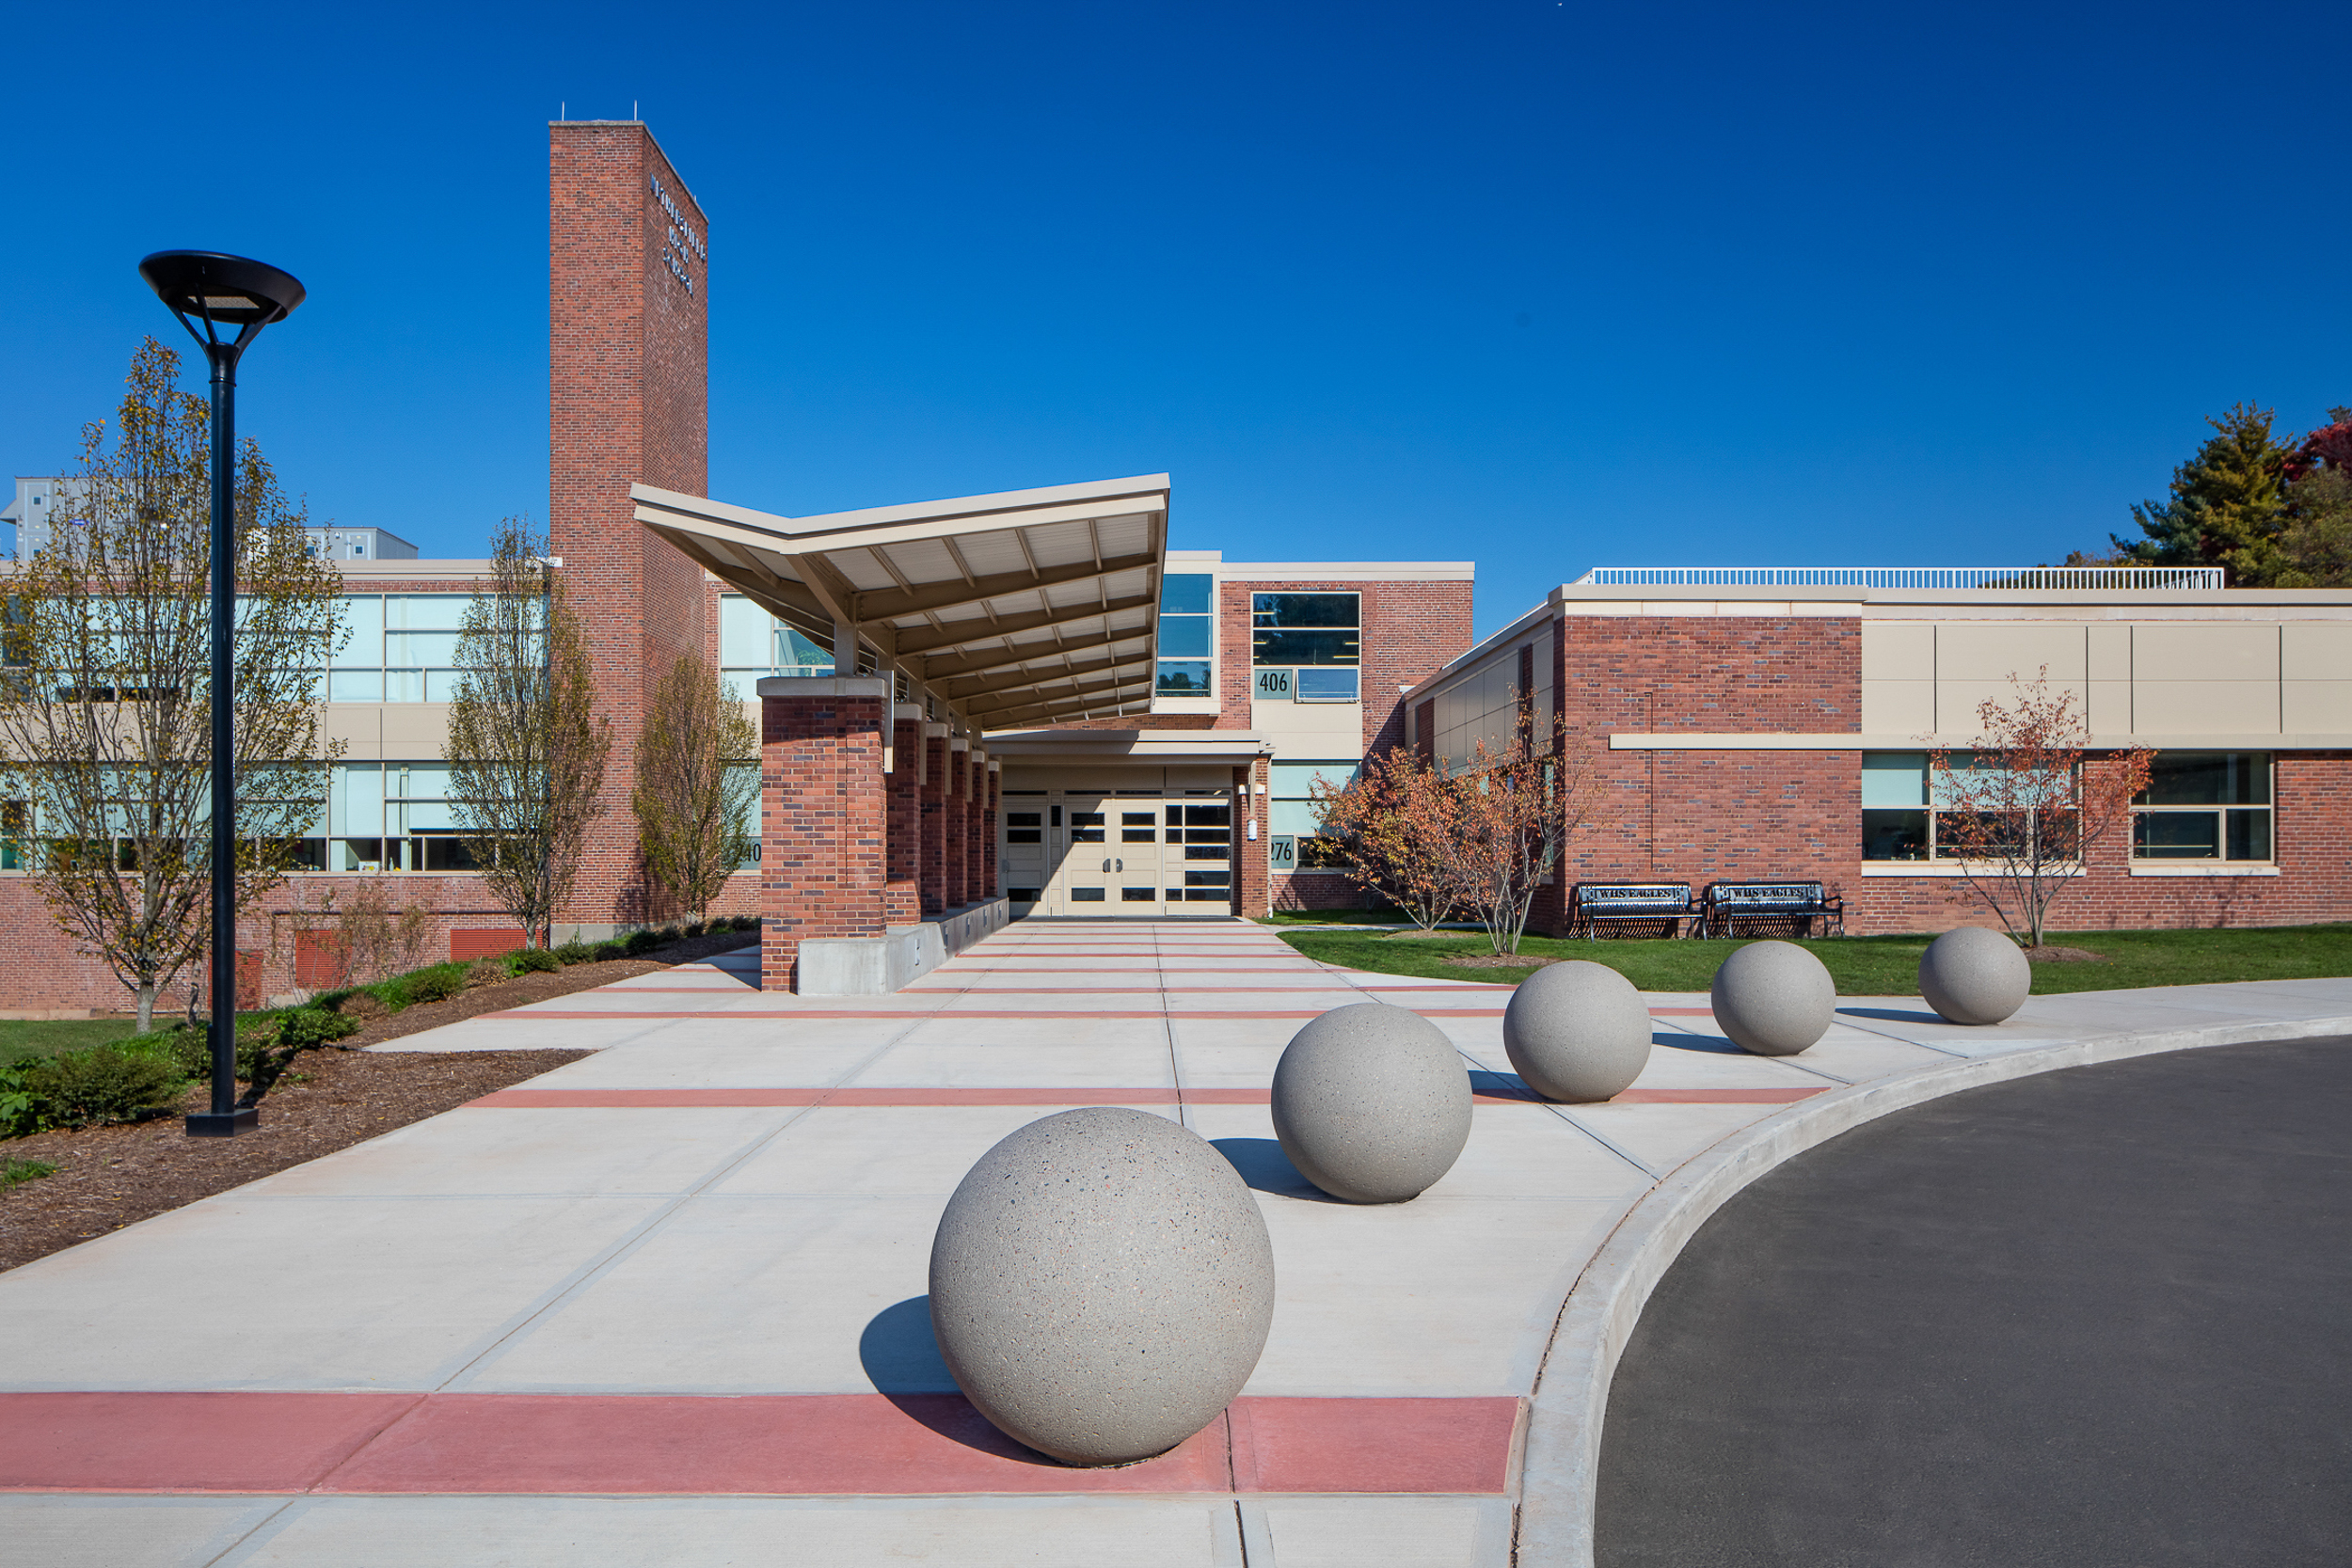 Main entrance of Wethersfield High School. Wethersfield, CT